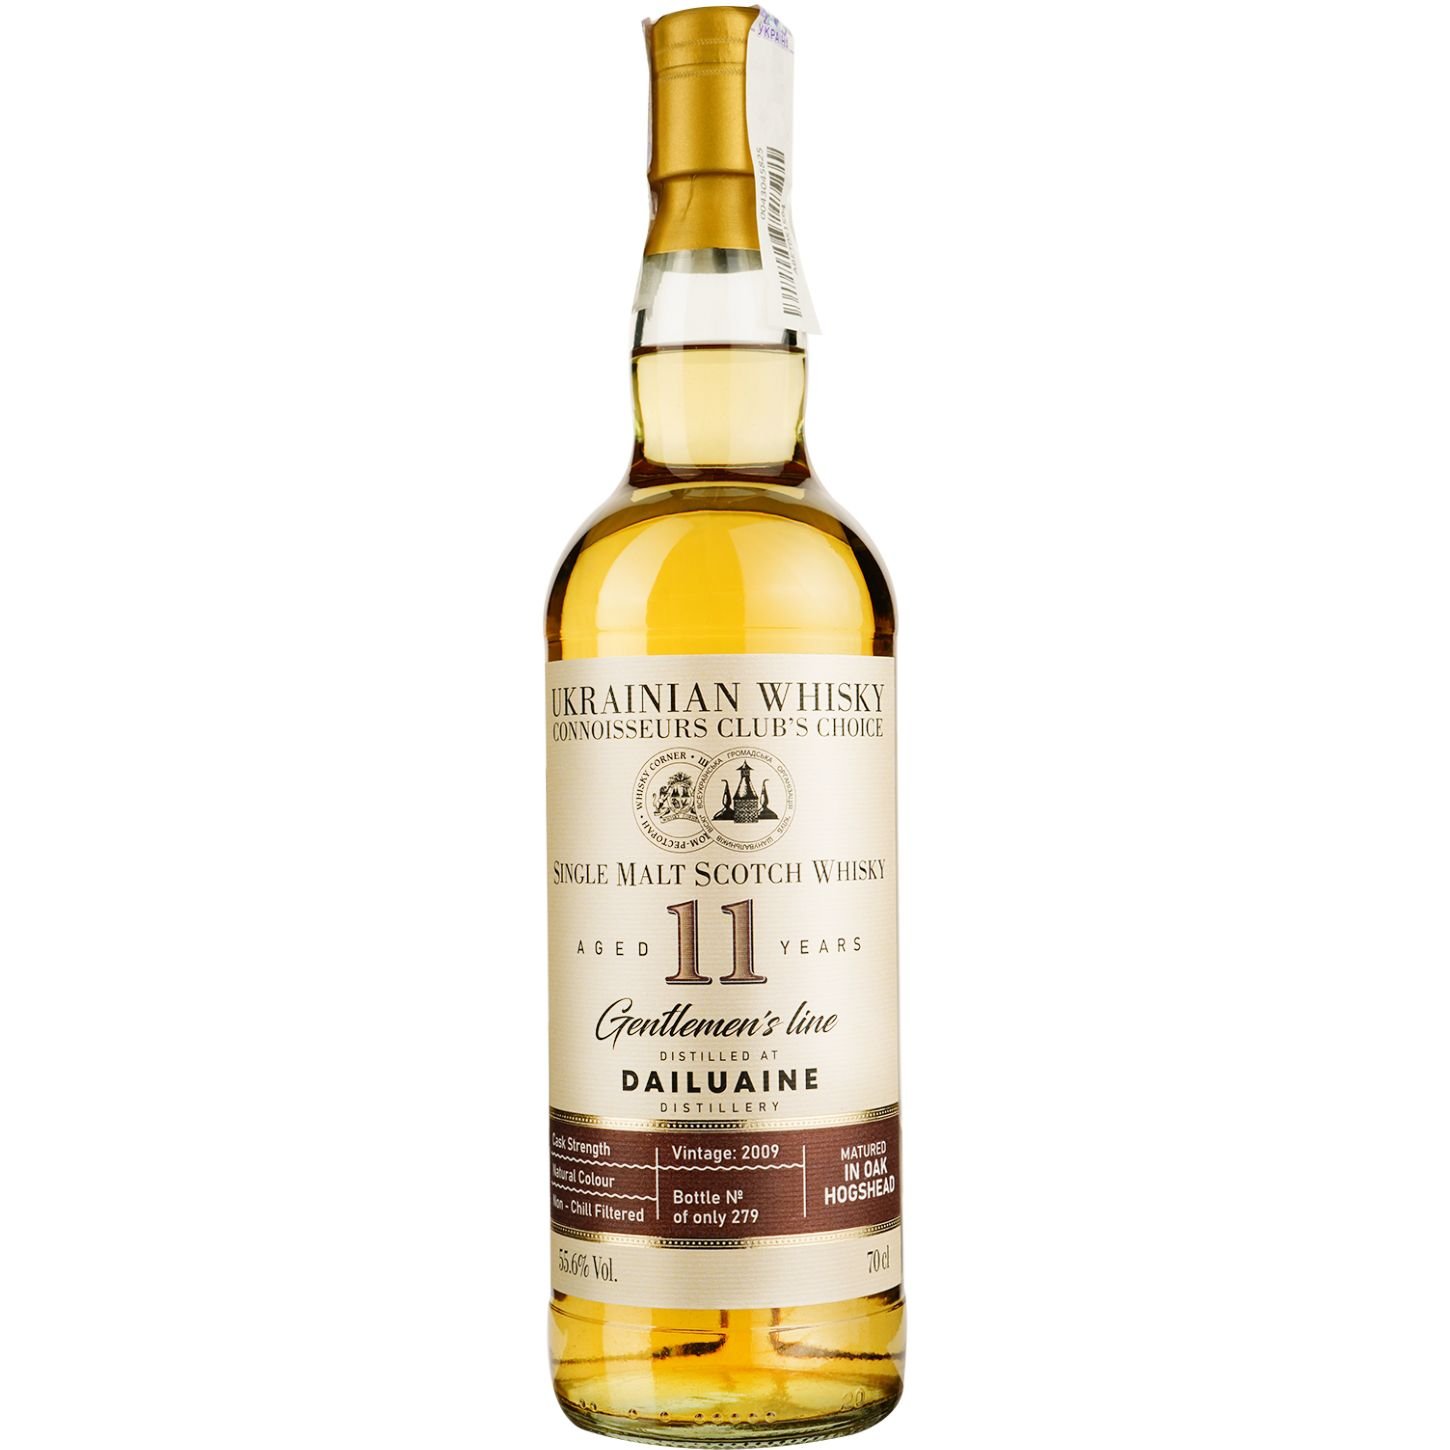 Виски Dailuaine 11 Years Old Single Malt Scotch Whisky, в подарочной упаковке, 55,6%, 0,7 л - фото 2